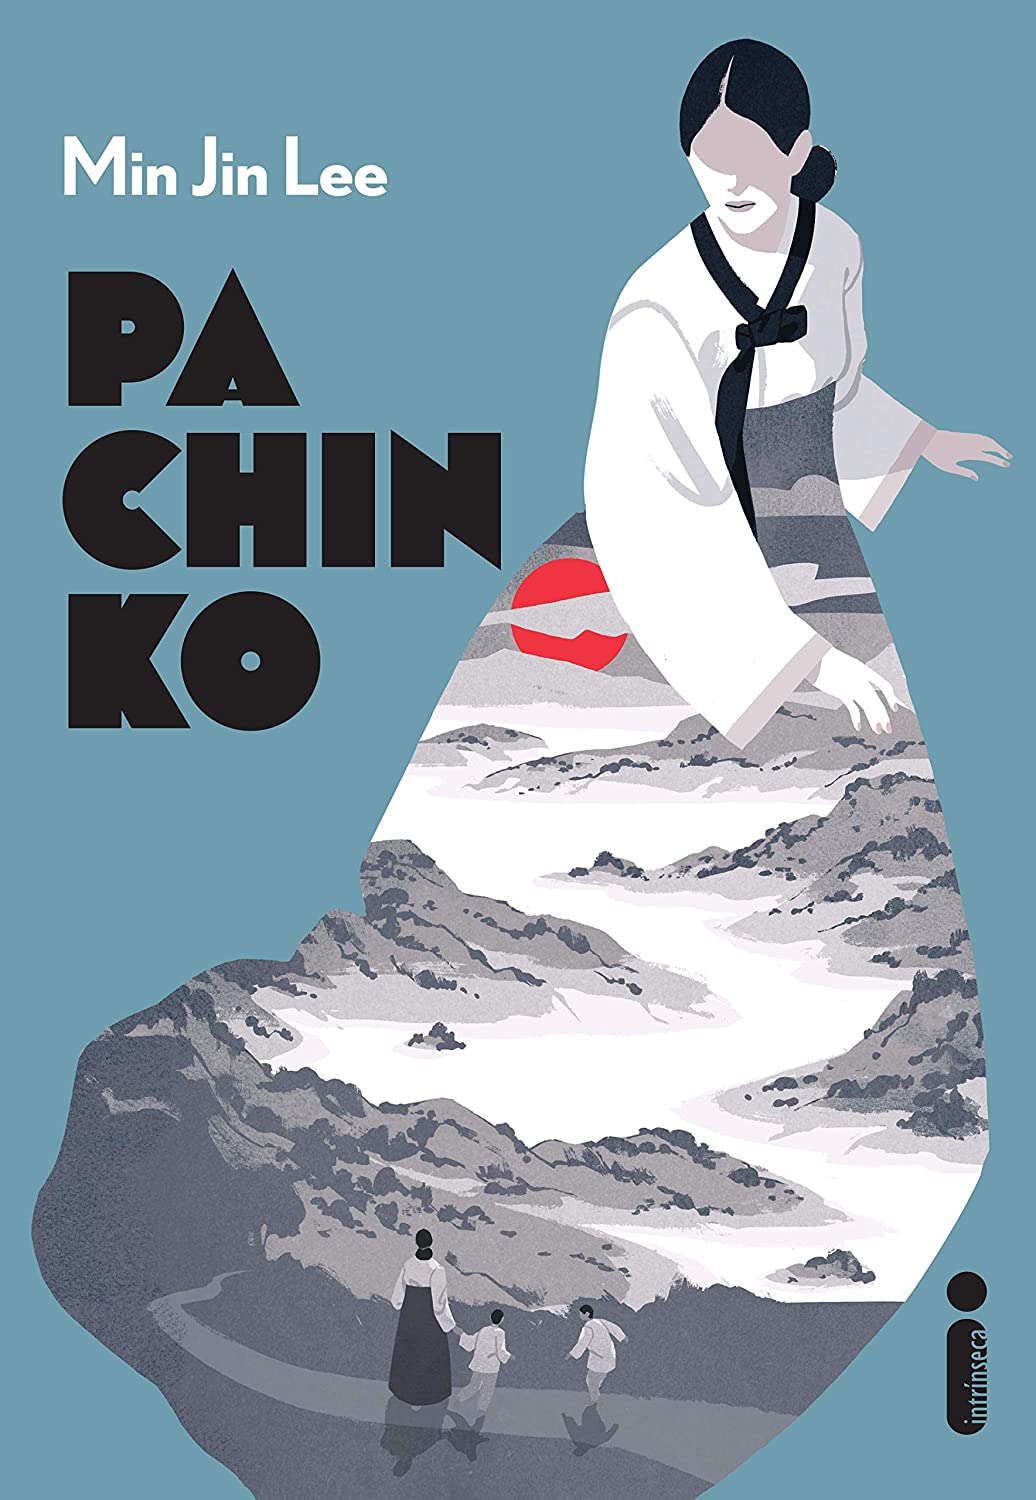 Min Jin Lee, Marina Vargas: Pachinko (Paperback, Português language, 2020, Intrínseca)